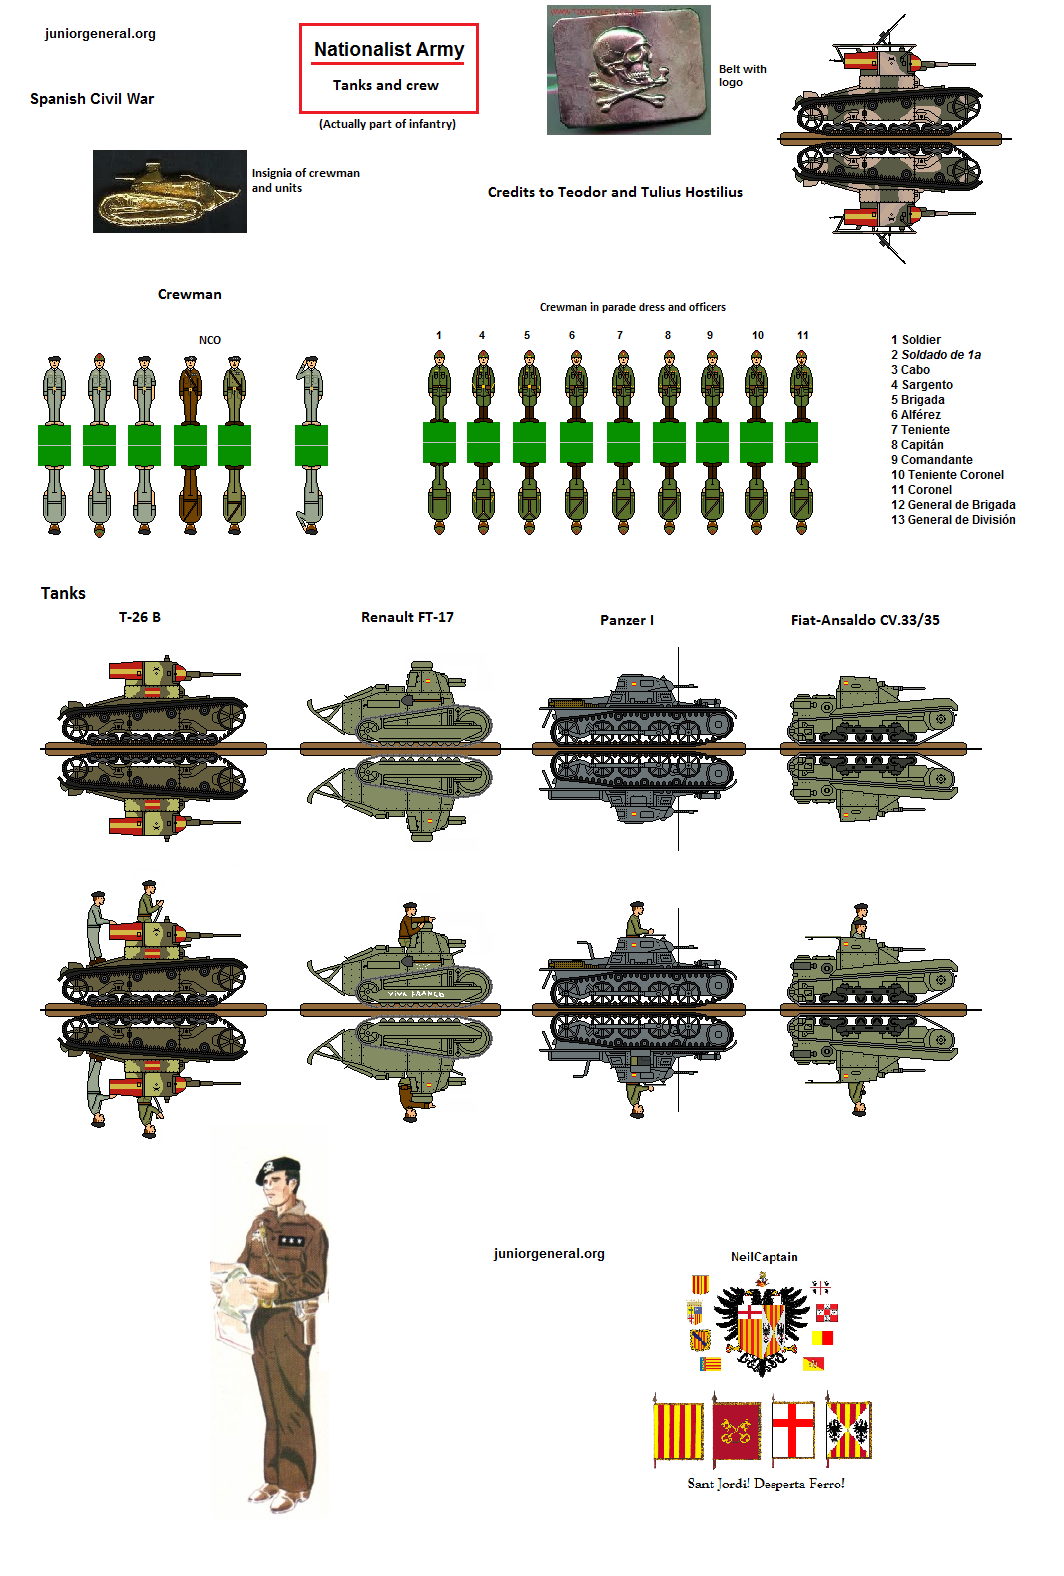 Nationalist Army Tanks